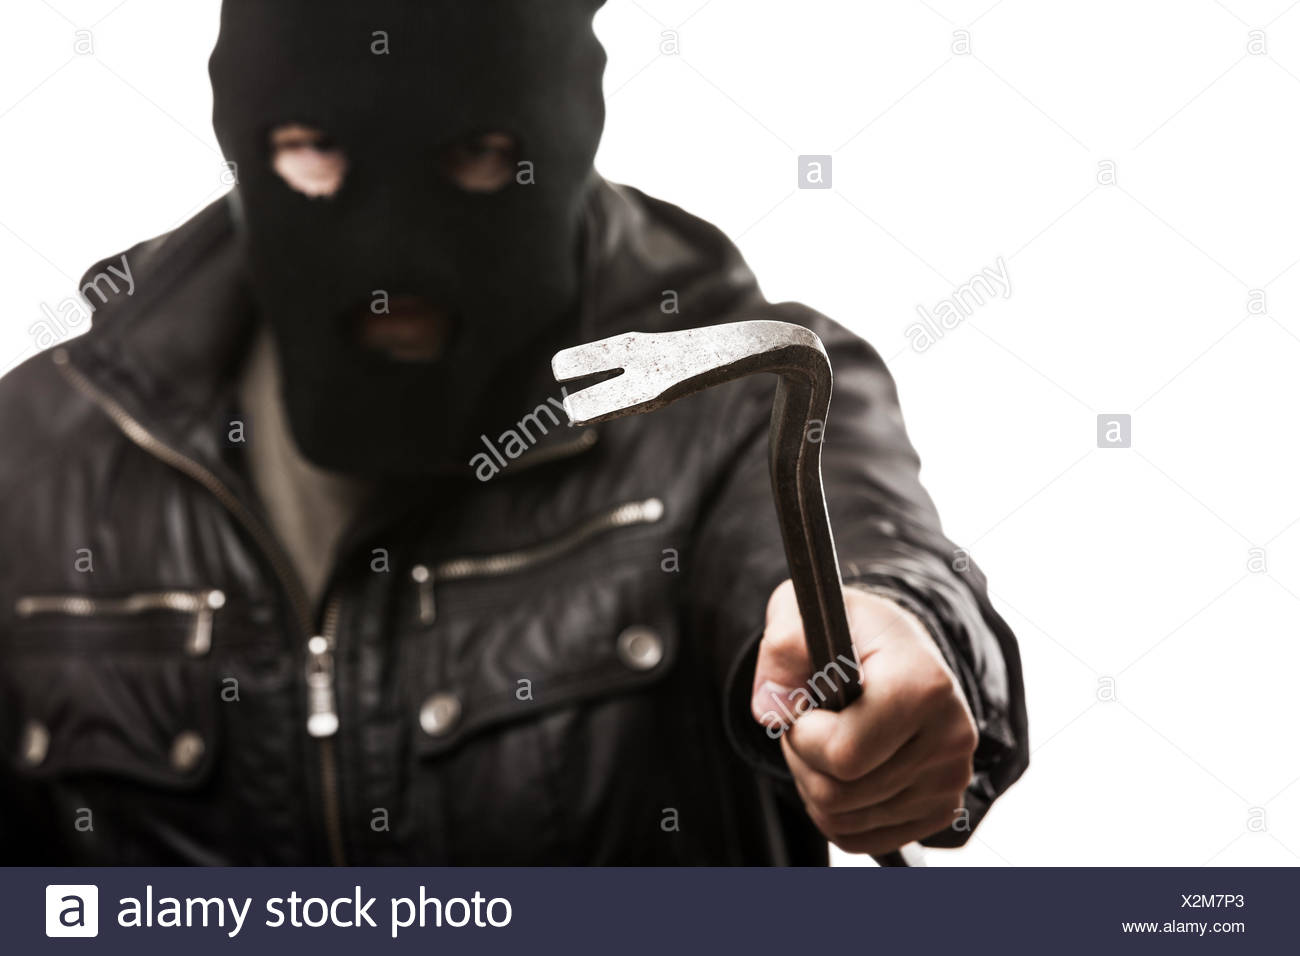 Ladro criminale o ladro uomo in passamontagna o maschera Foto stock - Alamy